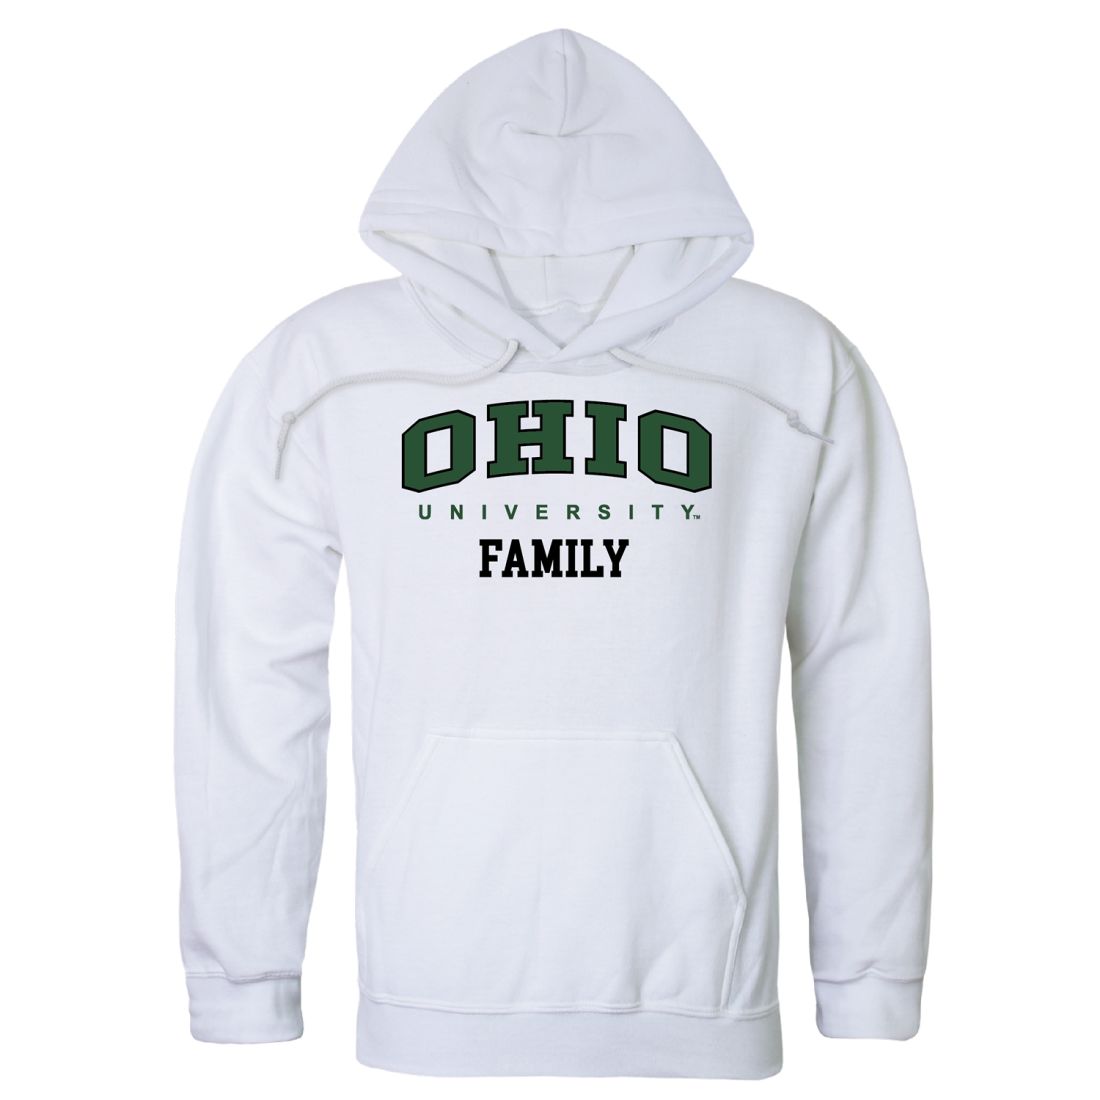 Ohio University Bobcats Family Hoodie Sweatshirts